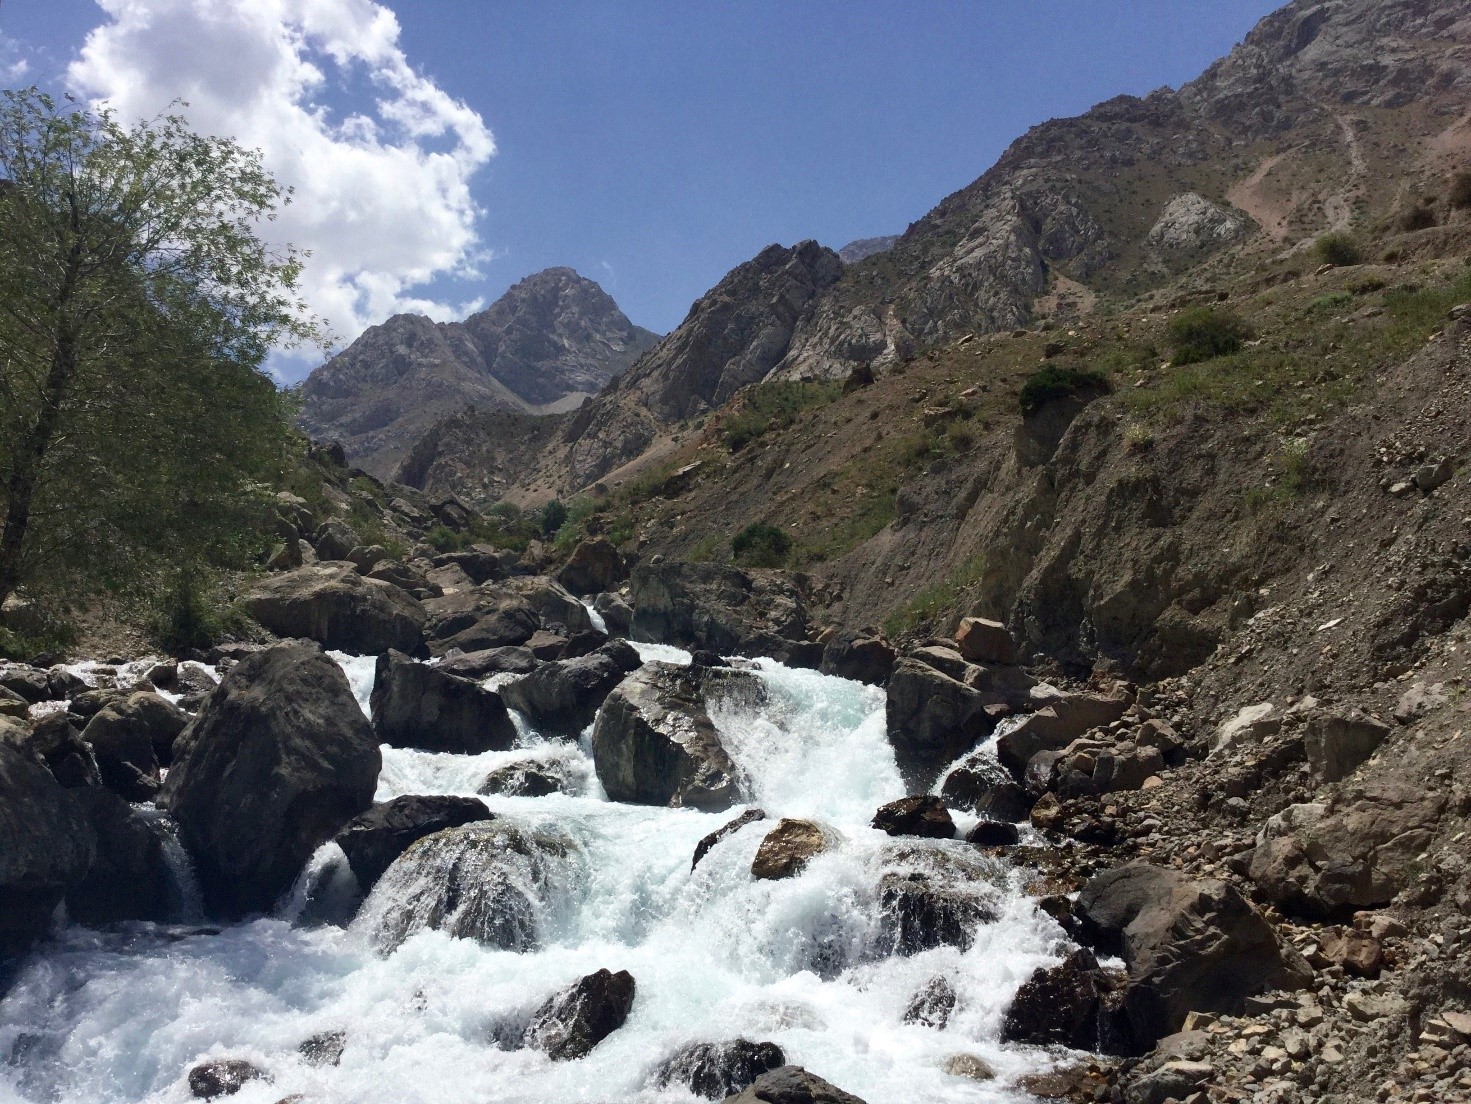 Www Xxxvideo Sex Com - Water in Tajikistan, abundant yet challenging - ACTED